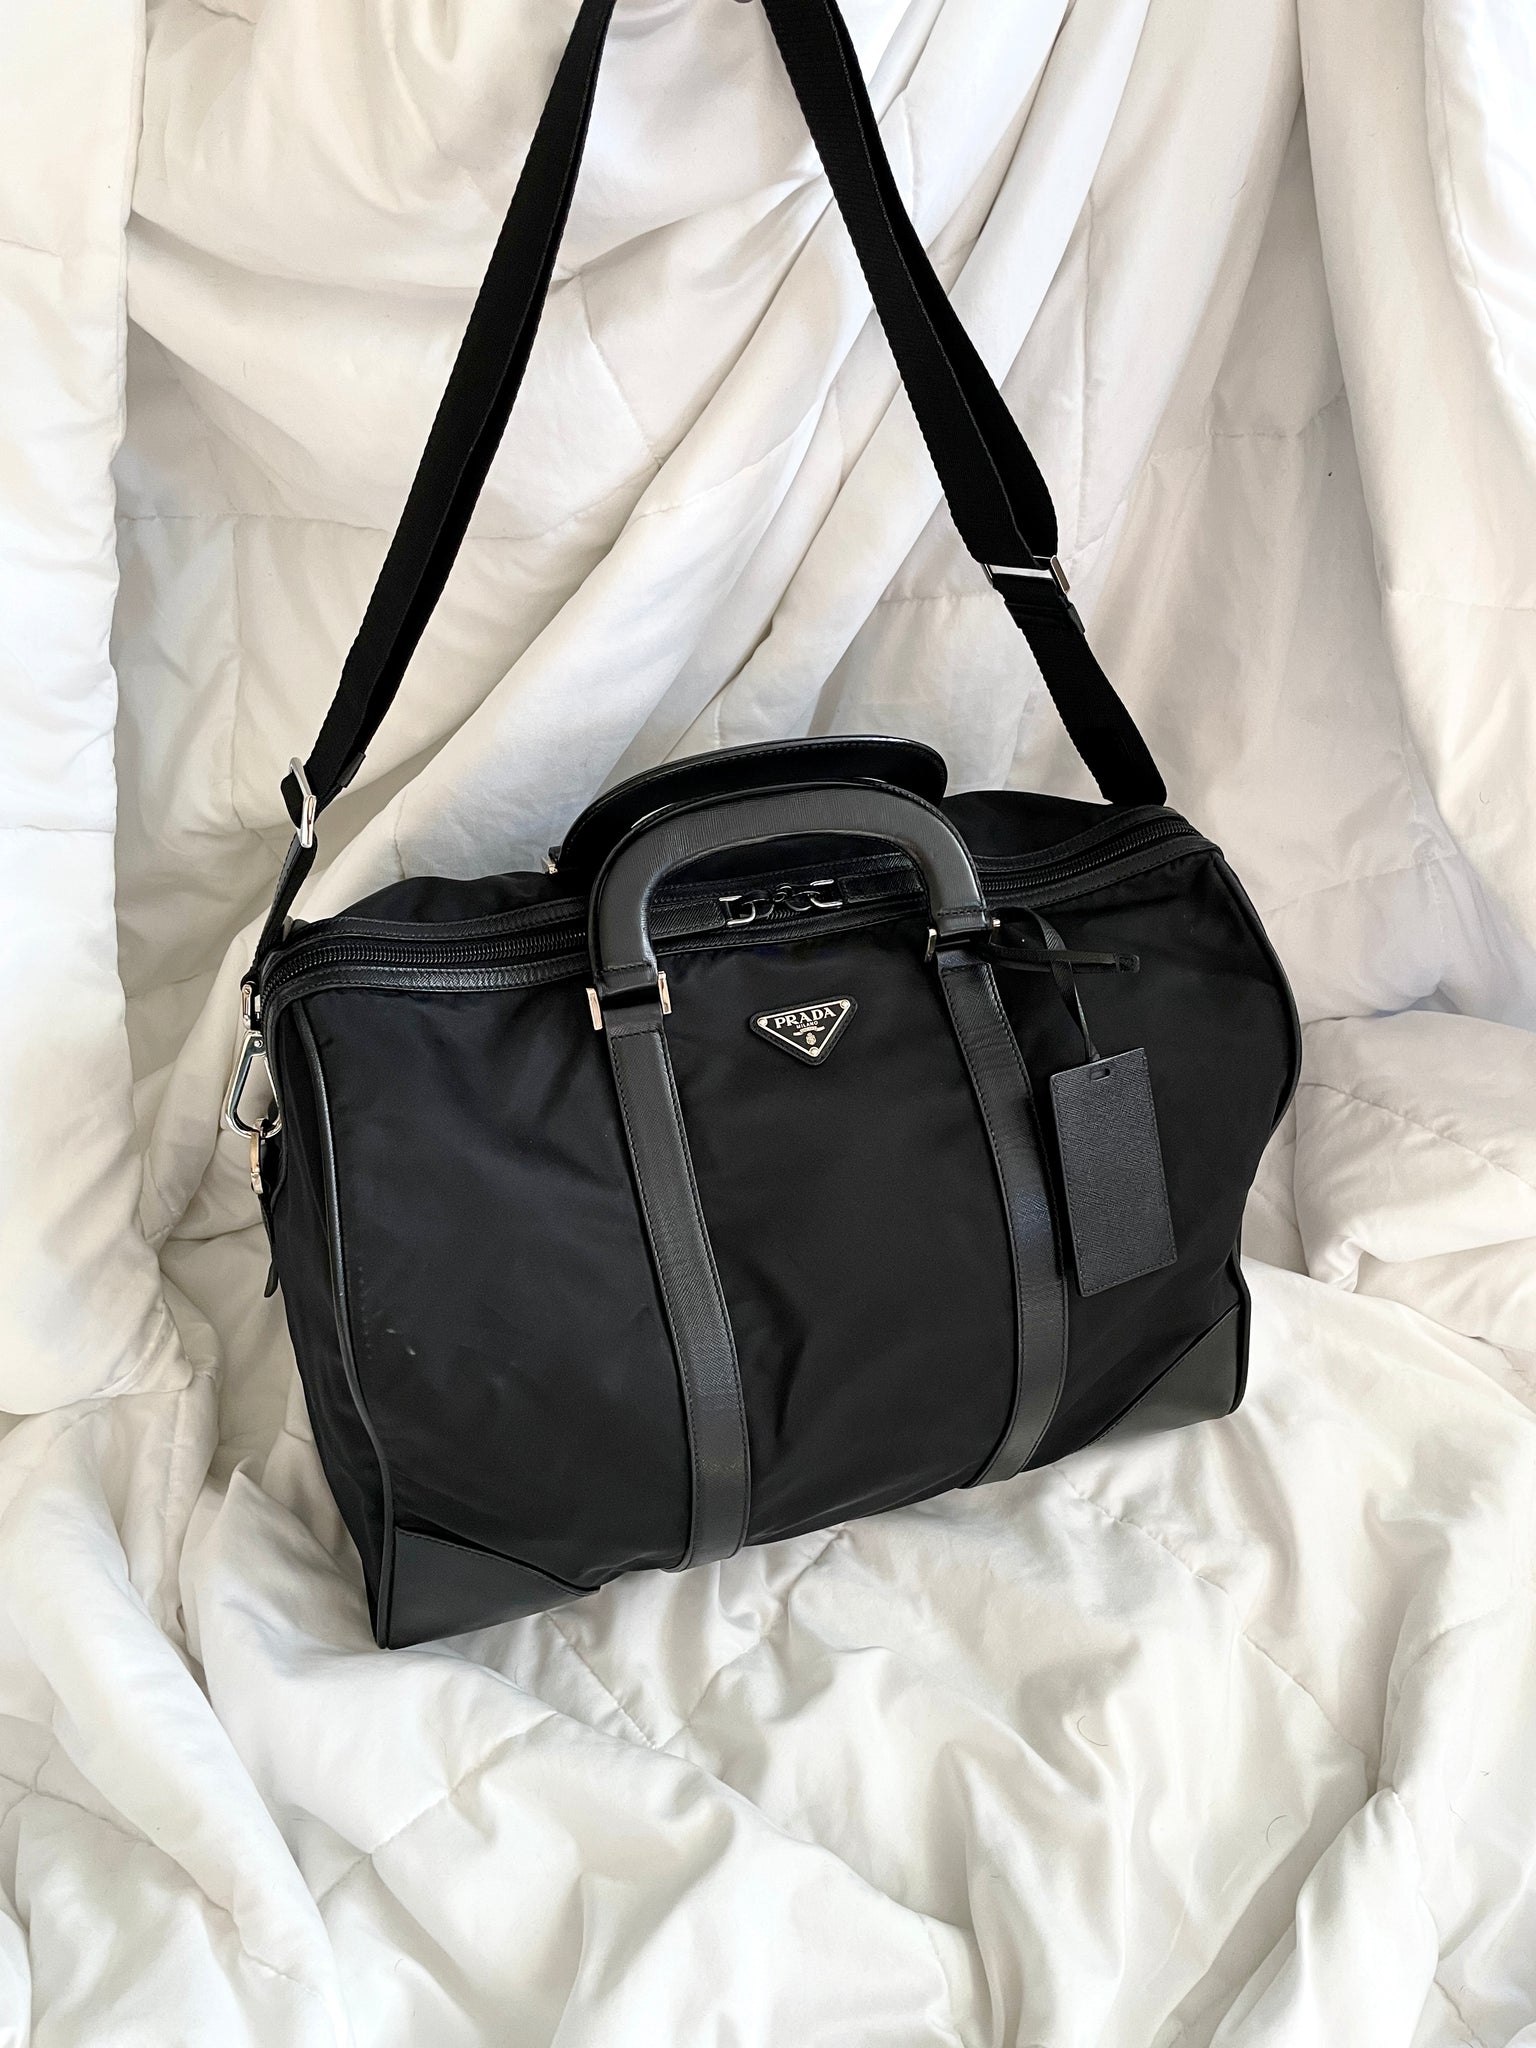 Prada Travel/Duffle/Duffel Bag made of Black Saffiano Leather and Nylon